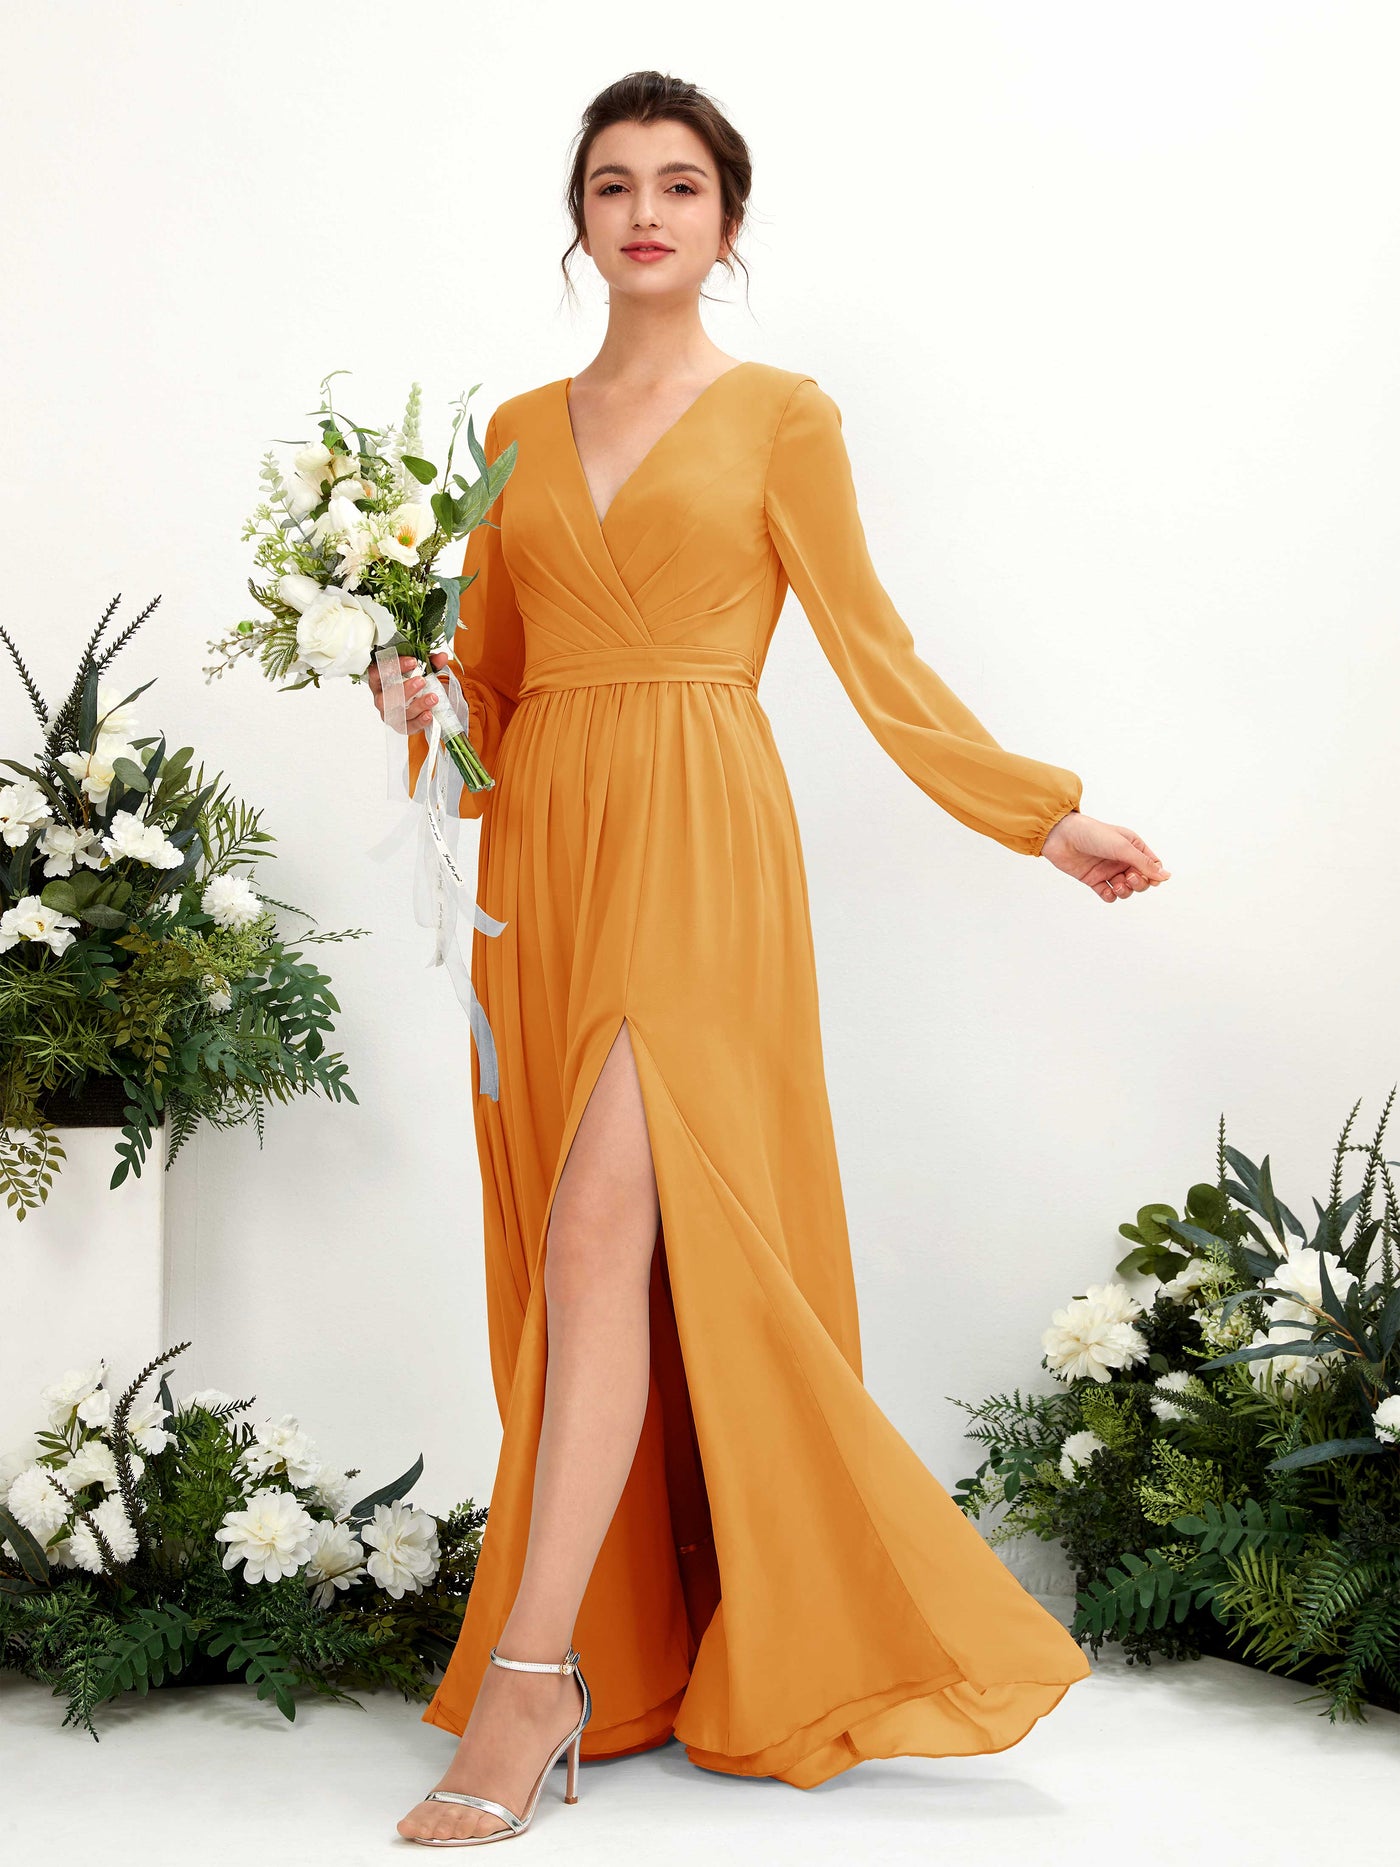 V-neck Long Sleeves Chiffon Bridesmaid Dress - Mango (81223802)#color_mango